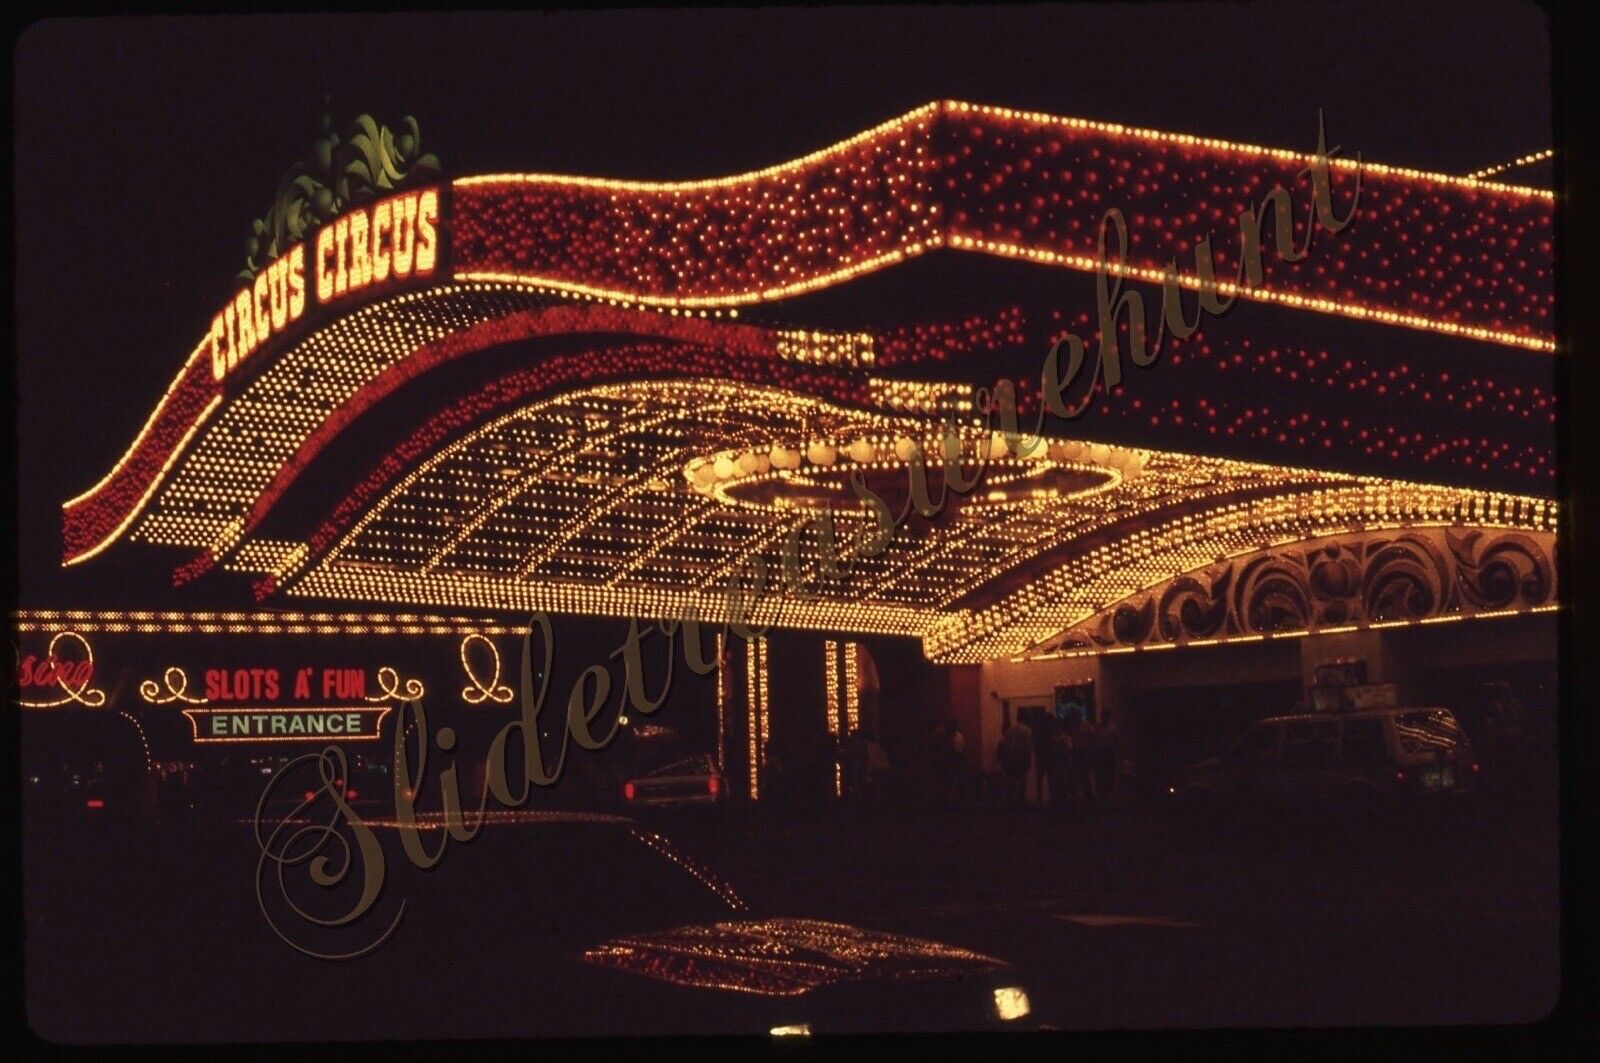 Las Vegas Circus Circus Casino Slots A Fun Night Lights 35mm Slide 1990s